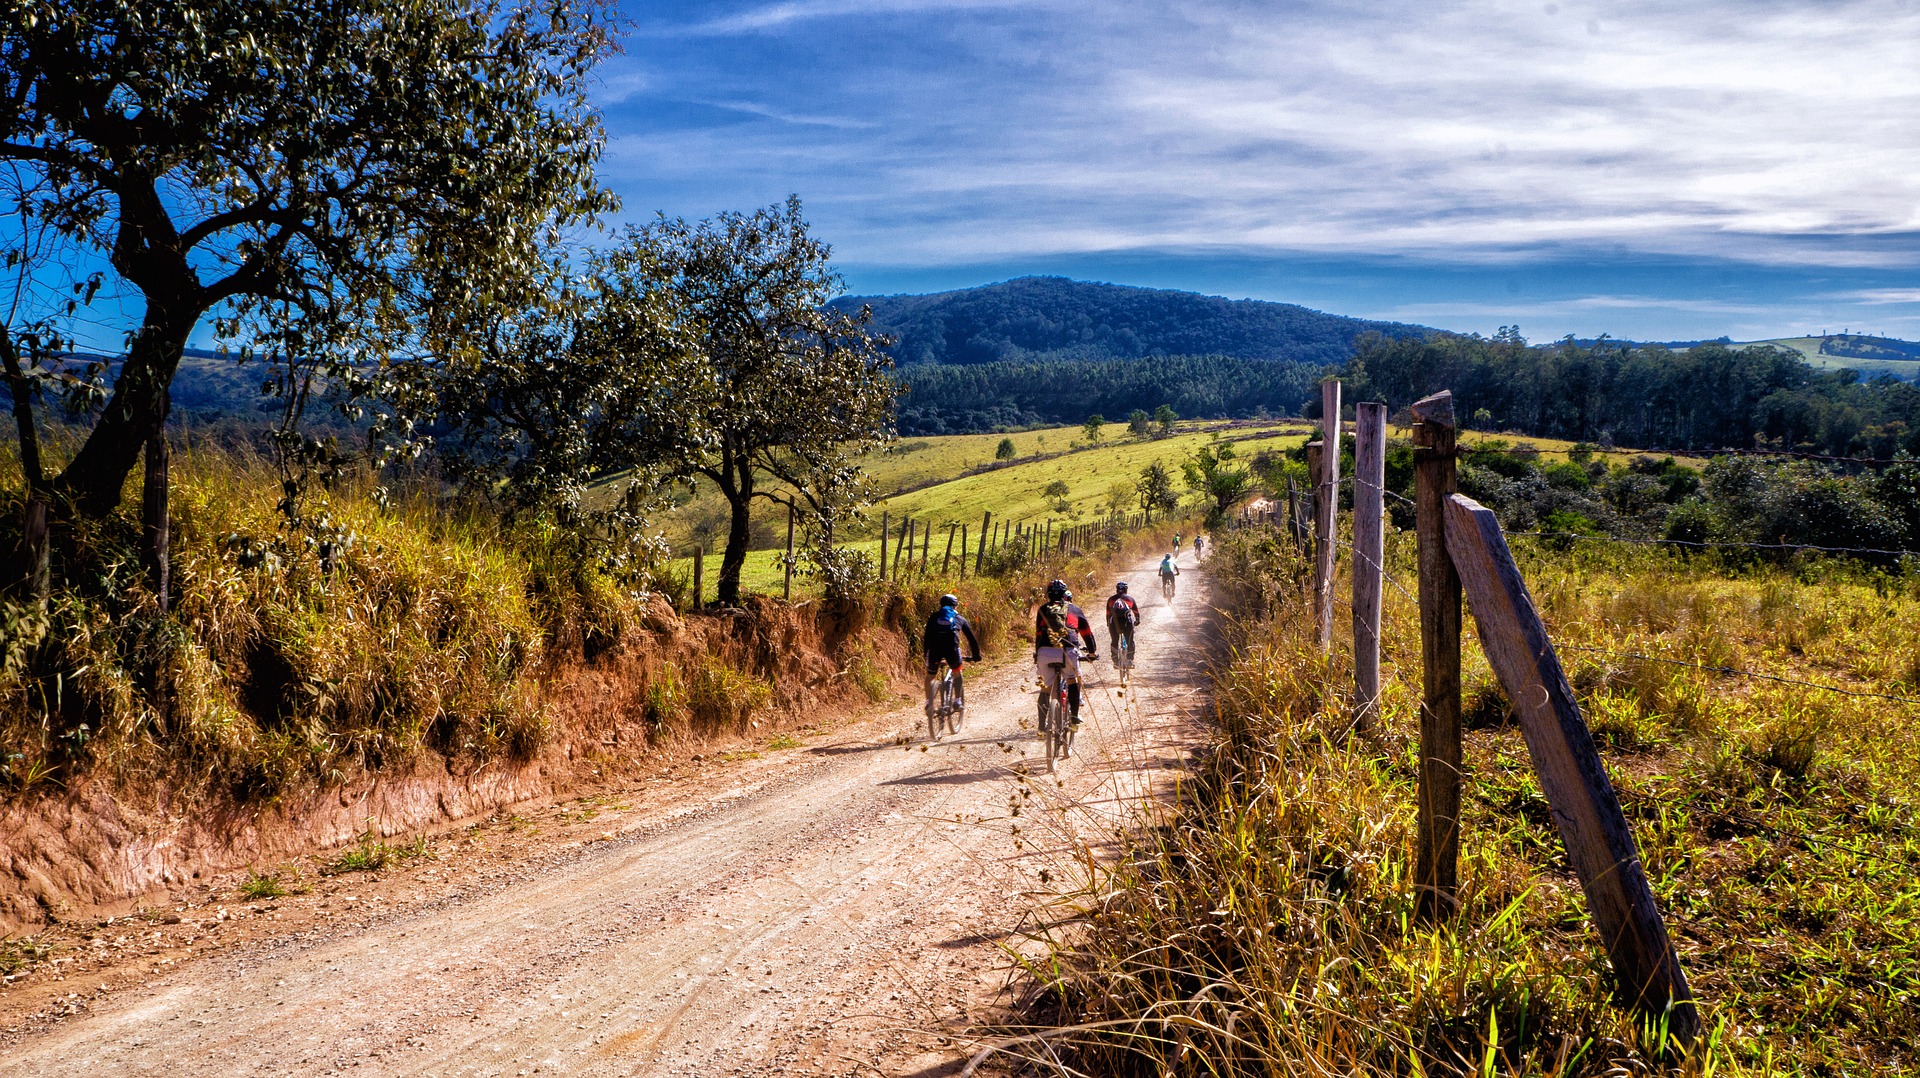 mountain bikers biking on a dirt road